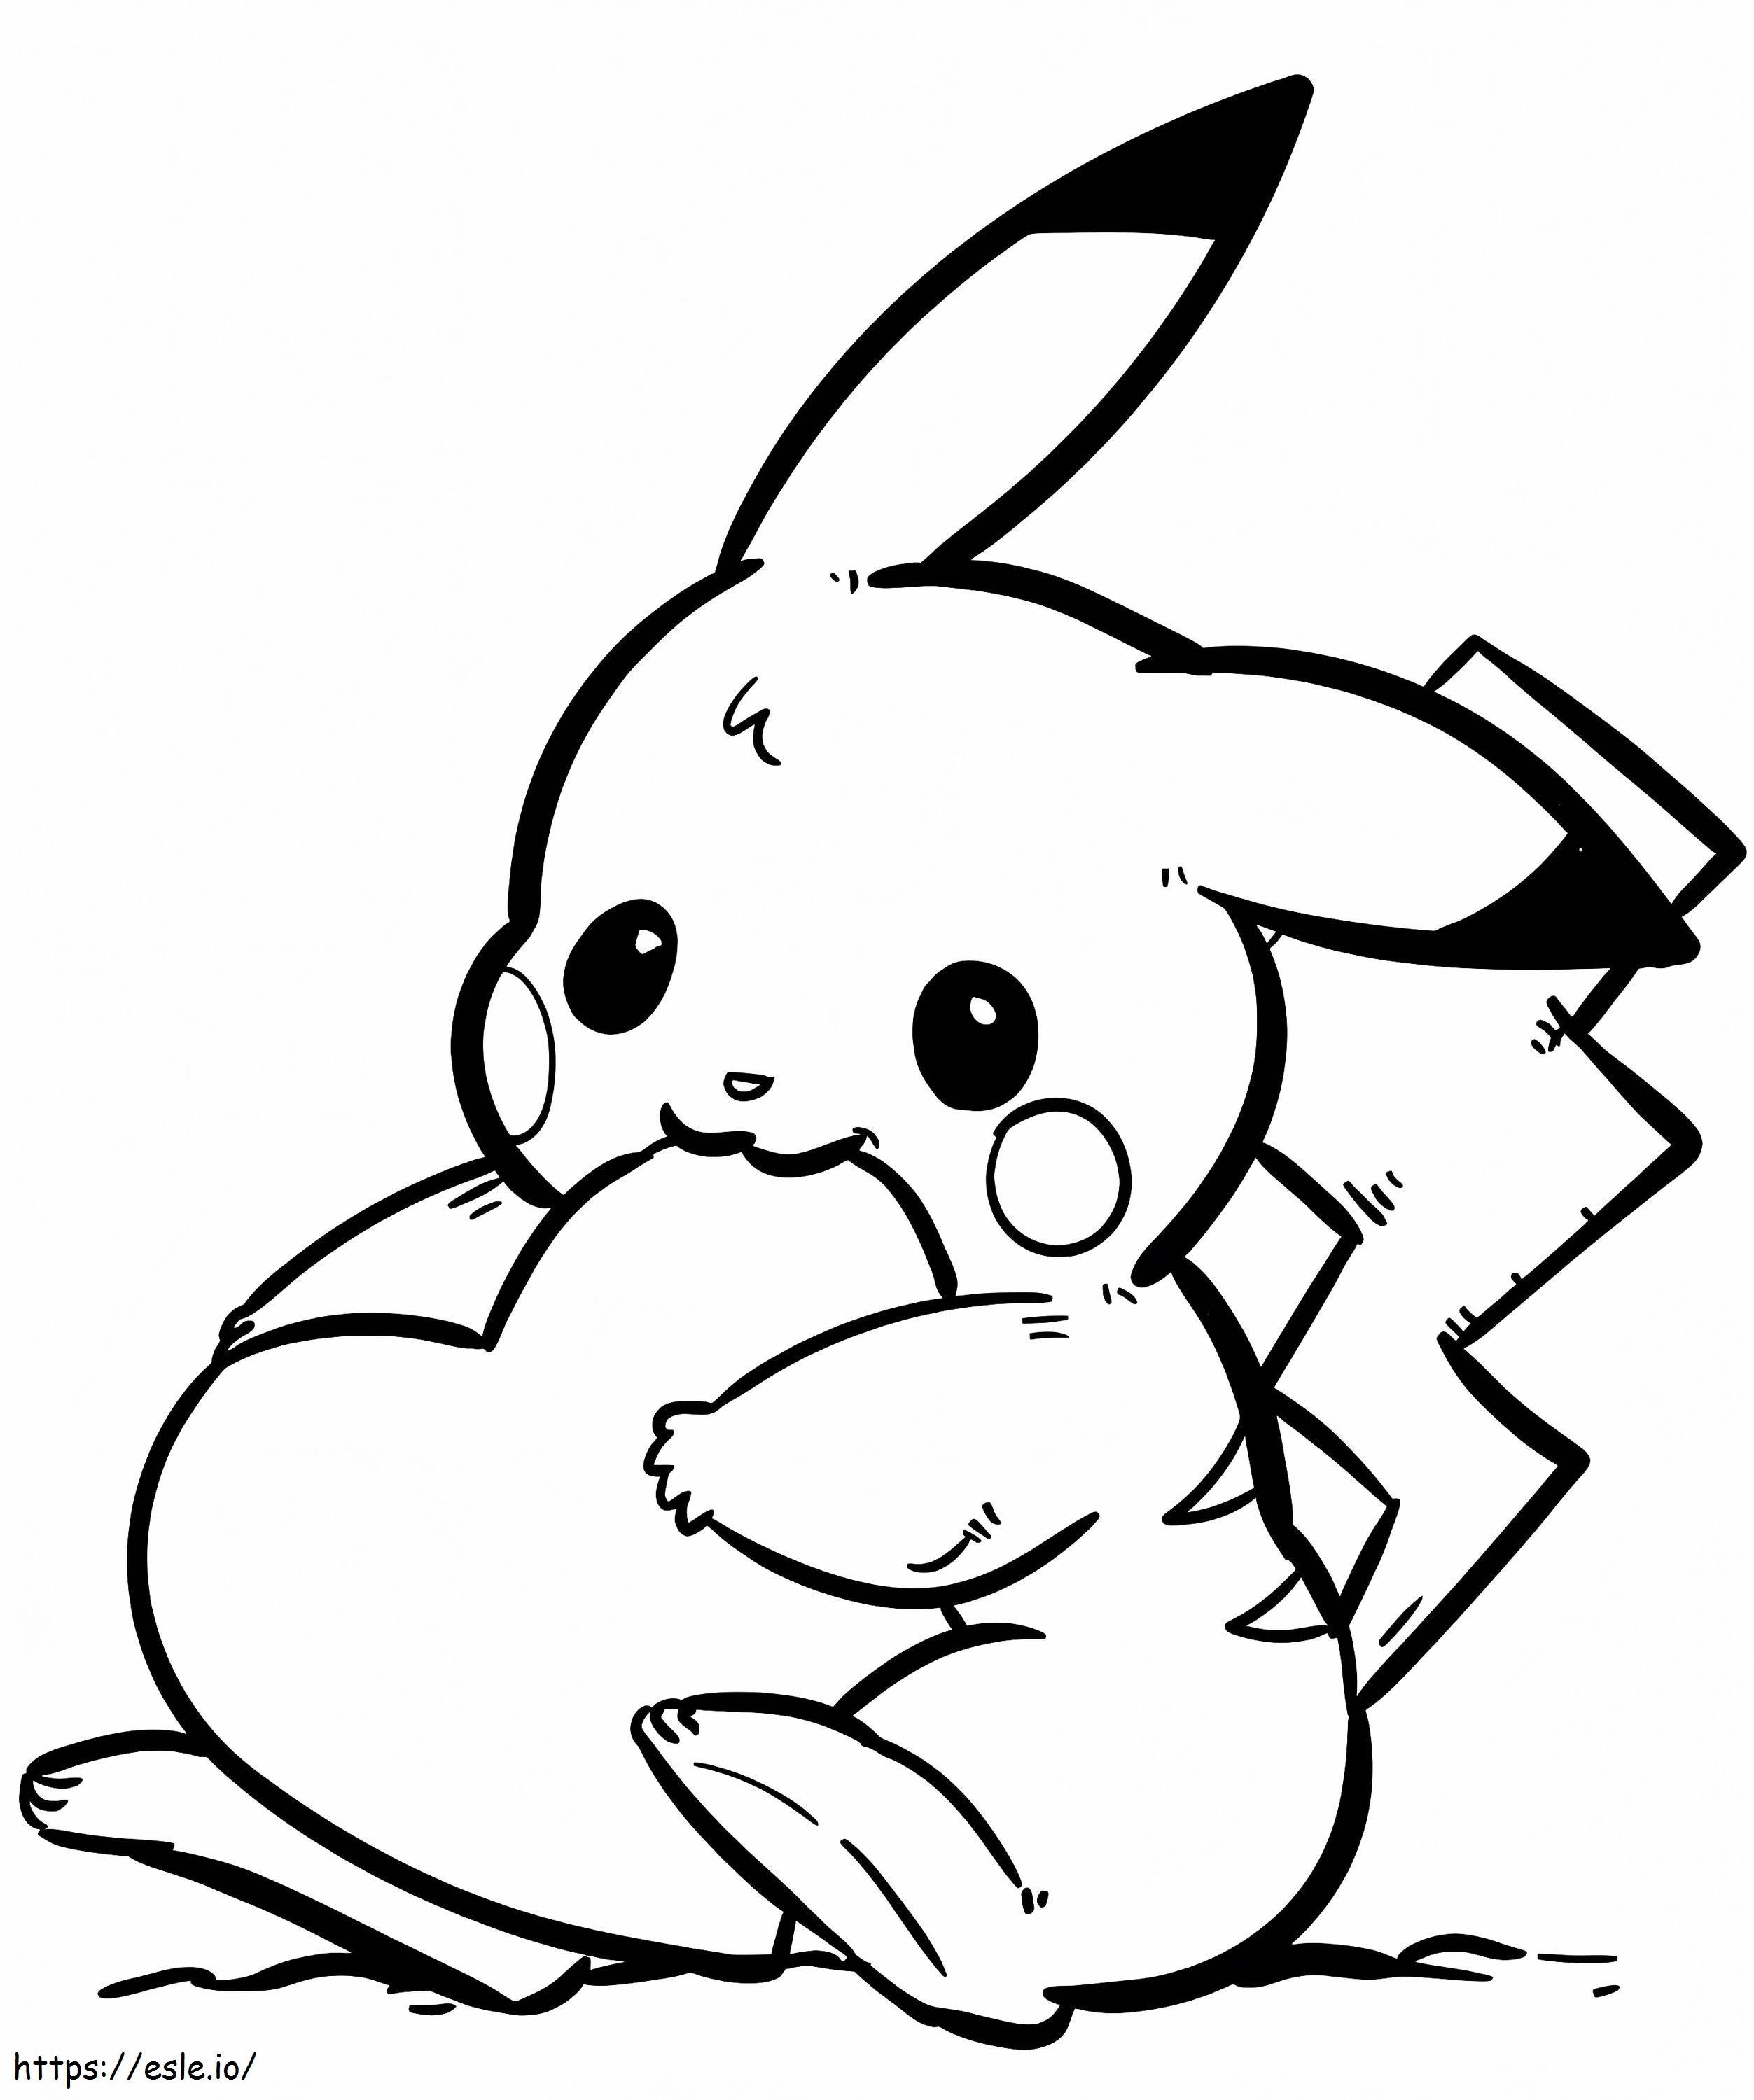 Pikachu szív alakú kifestő